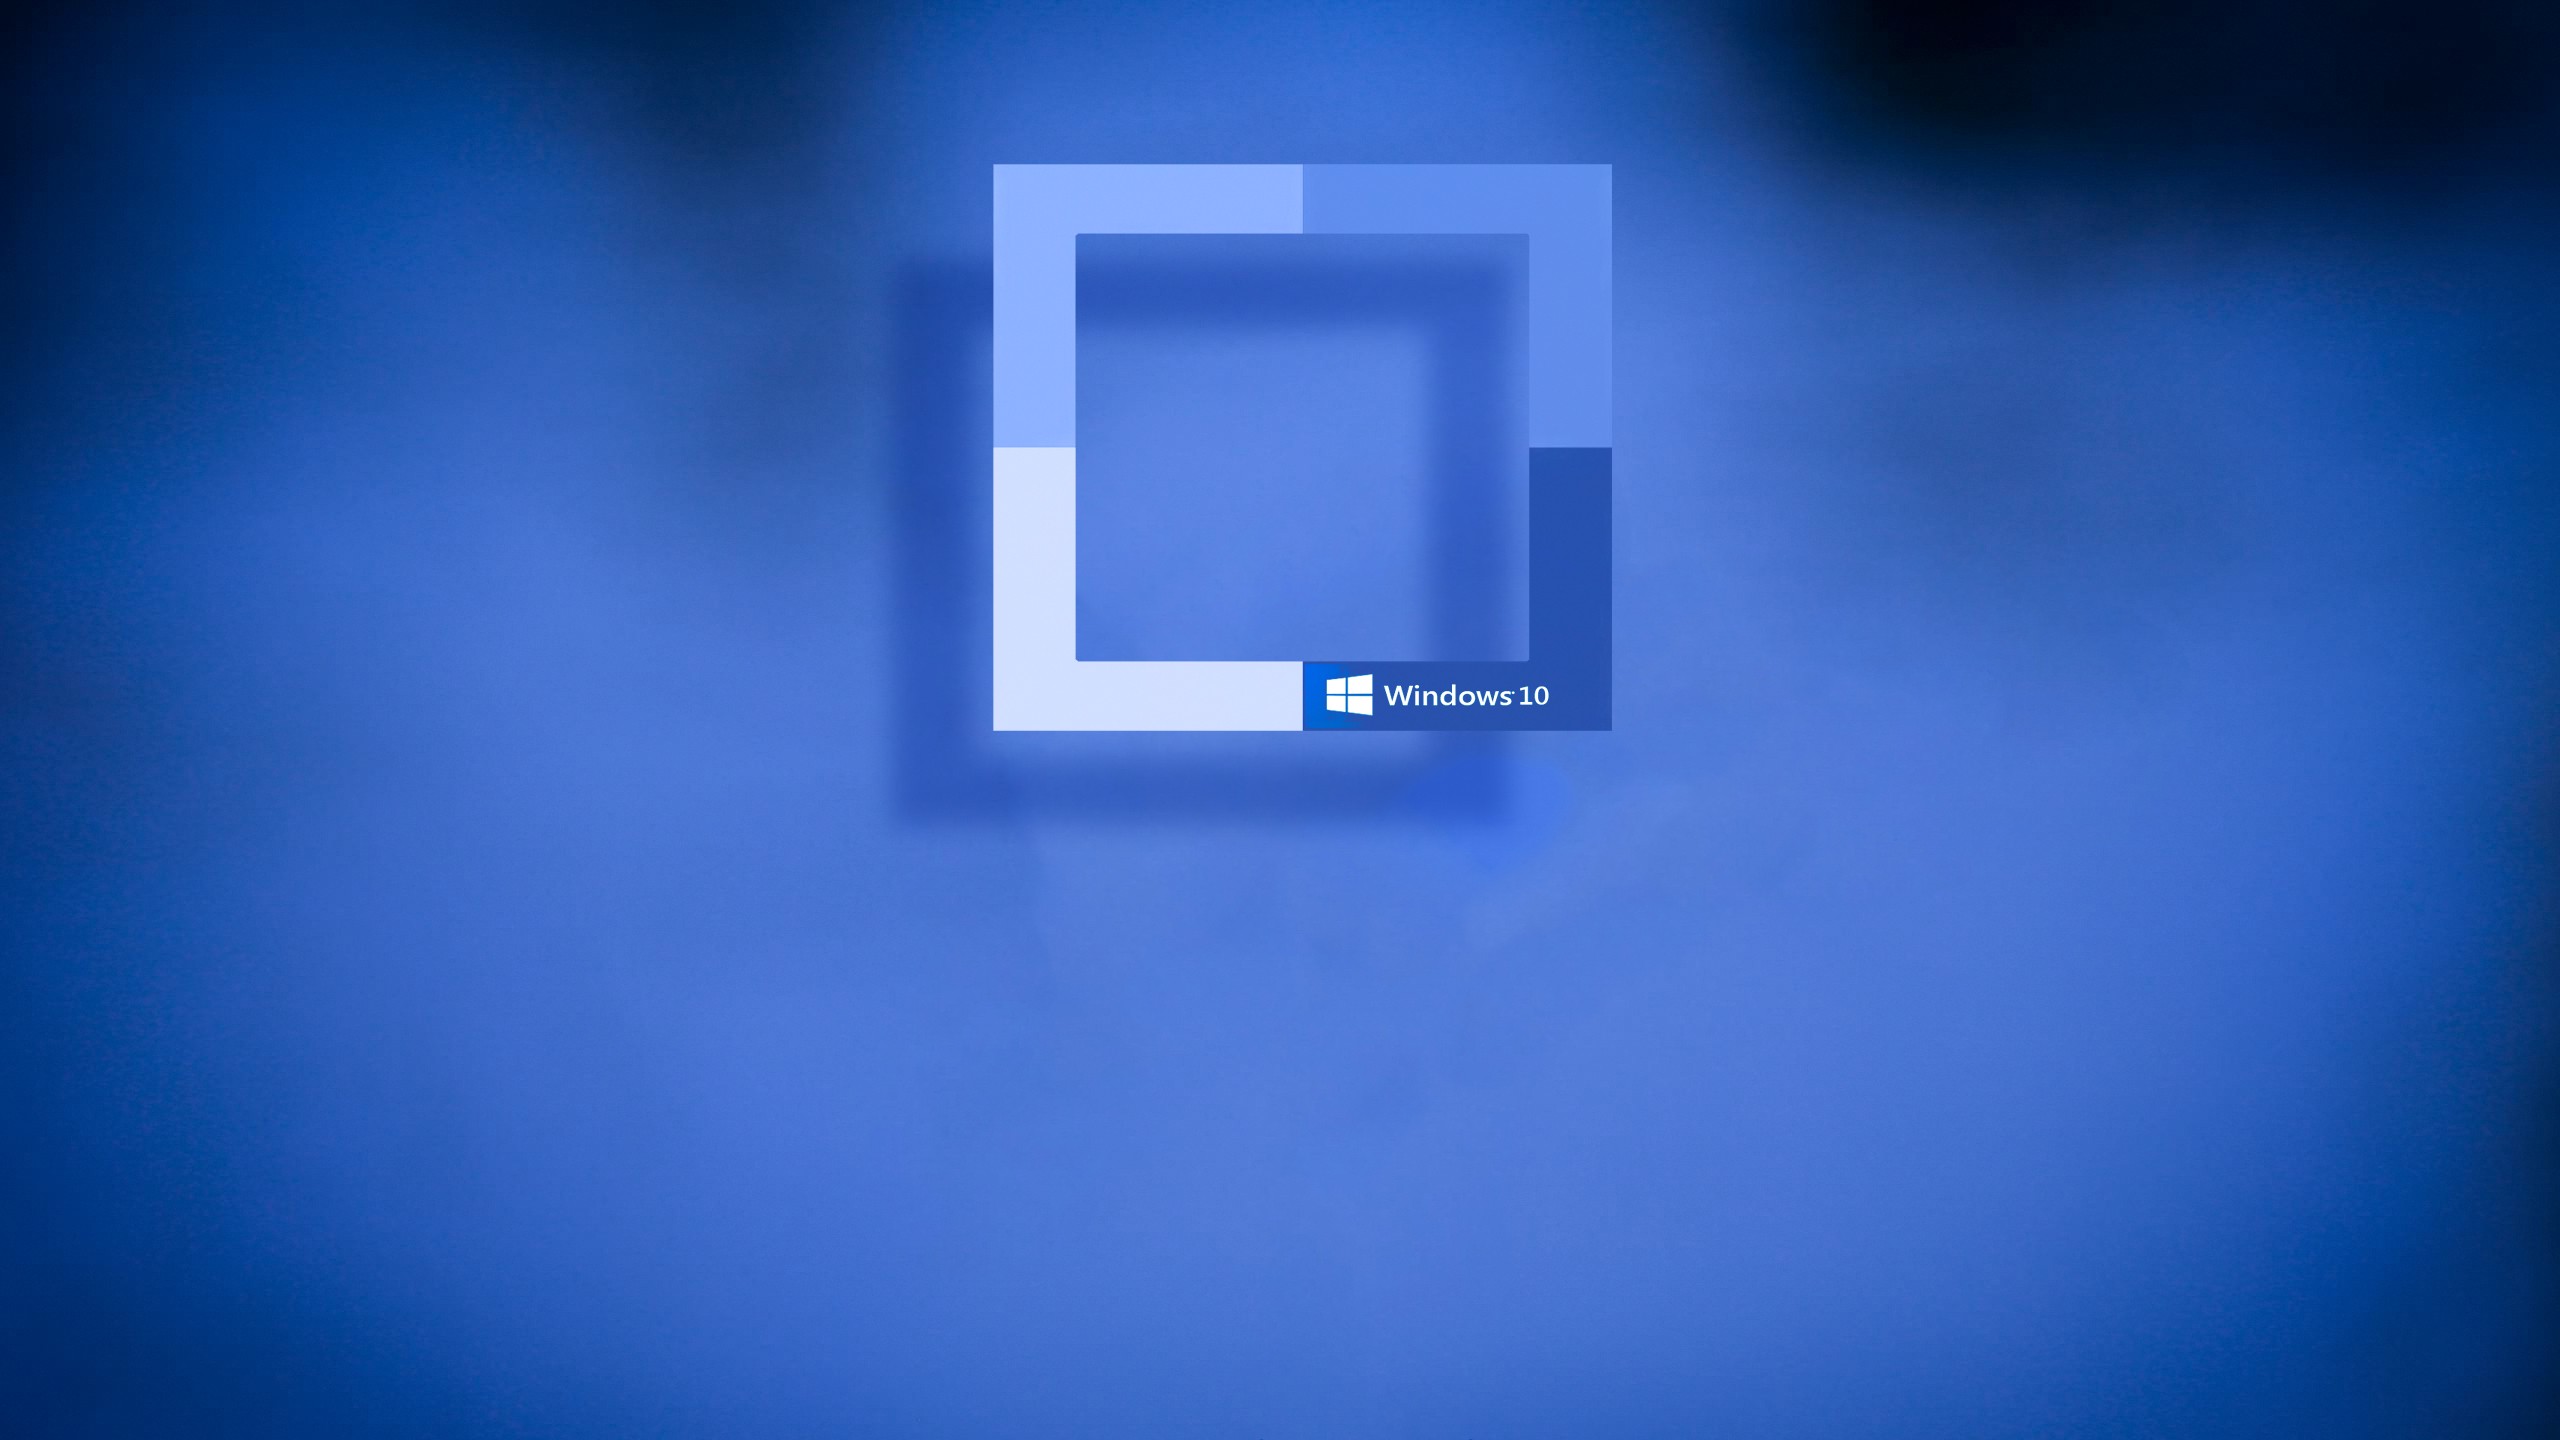 Wallpapers atmosphere blue Windows 10 on the desktop